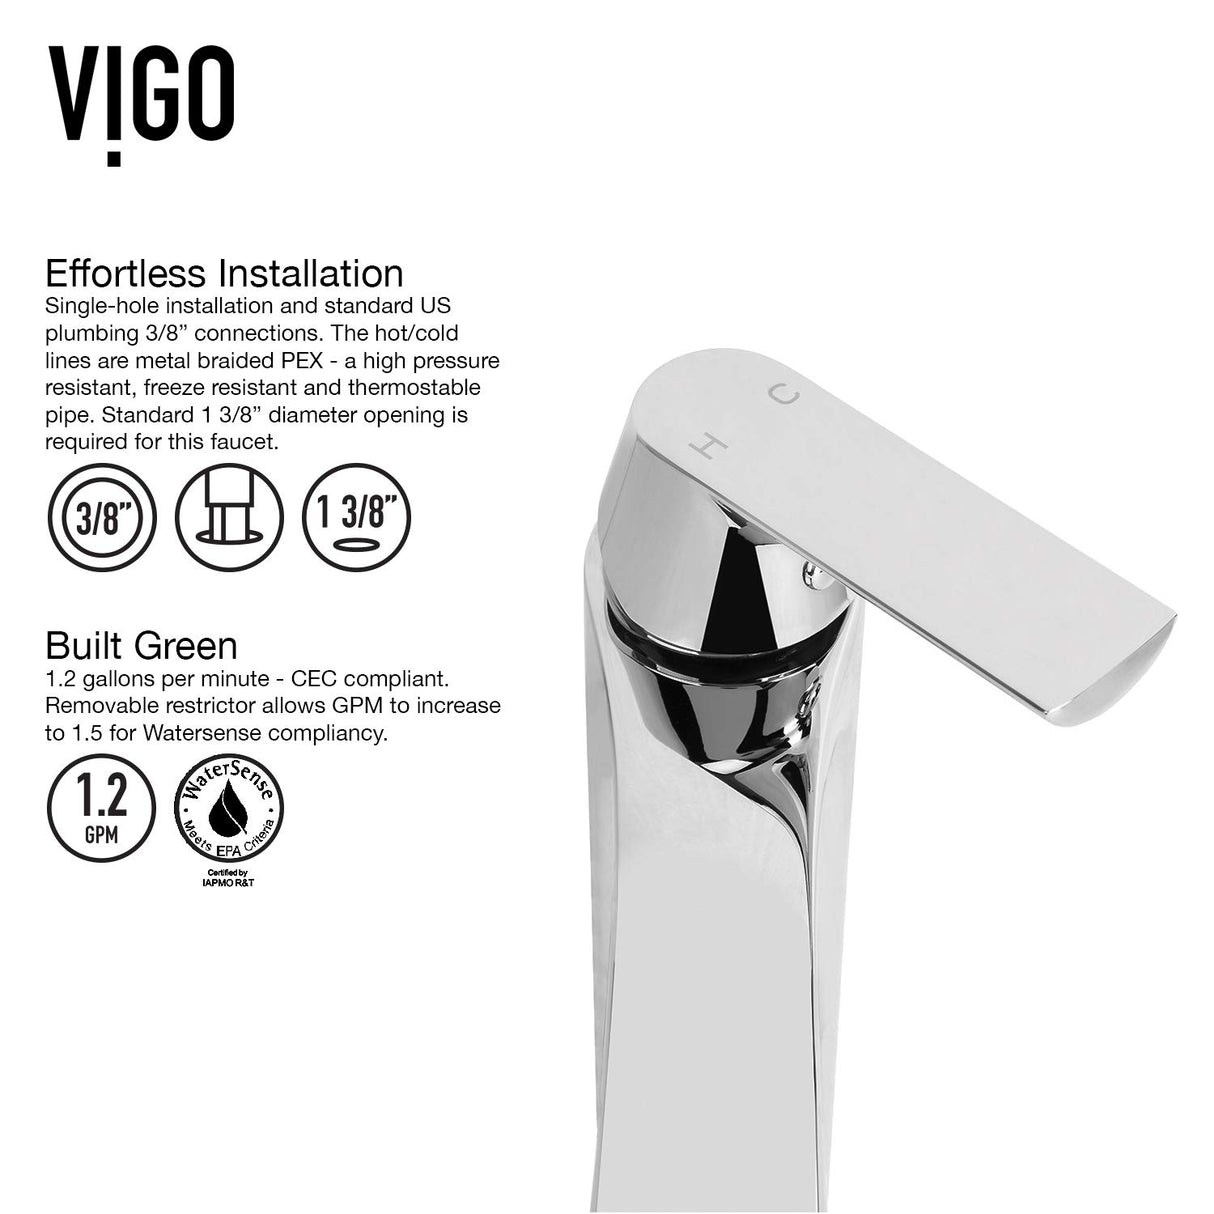 VIGO Linus 10.625 inch H Single Hole Single Handle Bathroom Faucet in Chrome - Vessel Sink Faucet VG03013CH